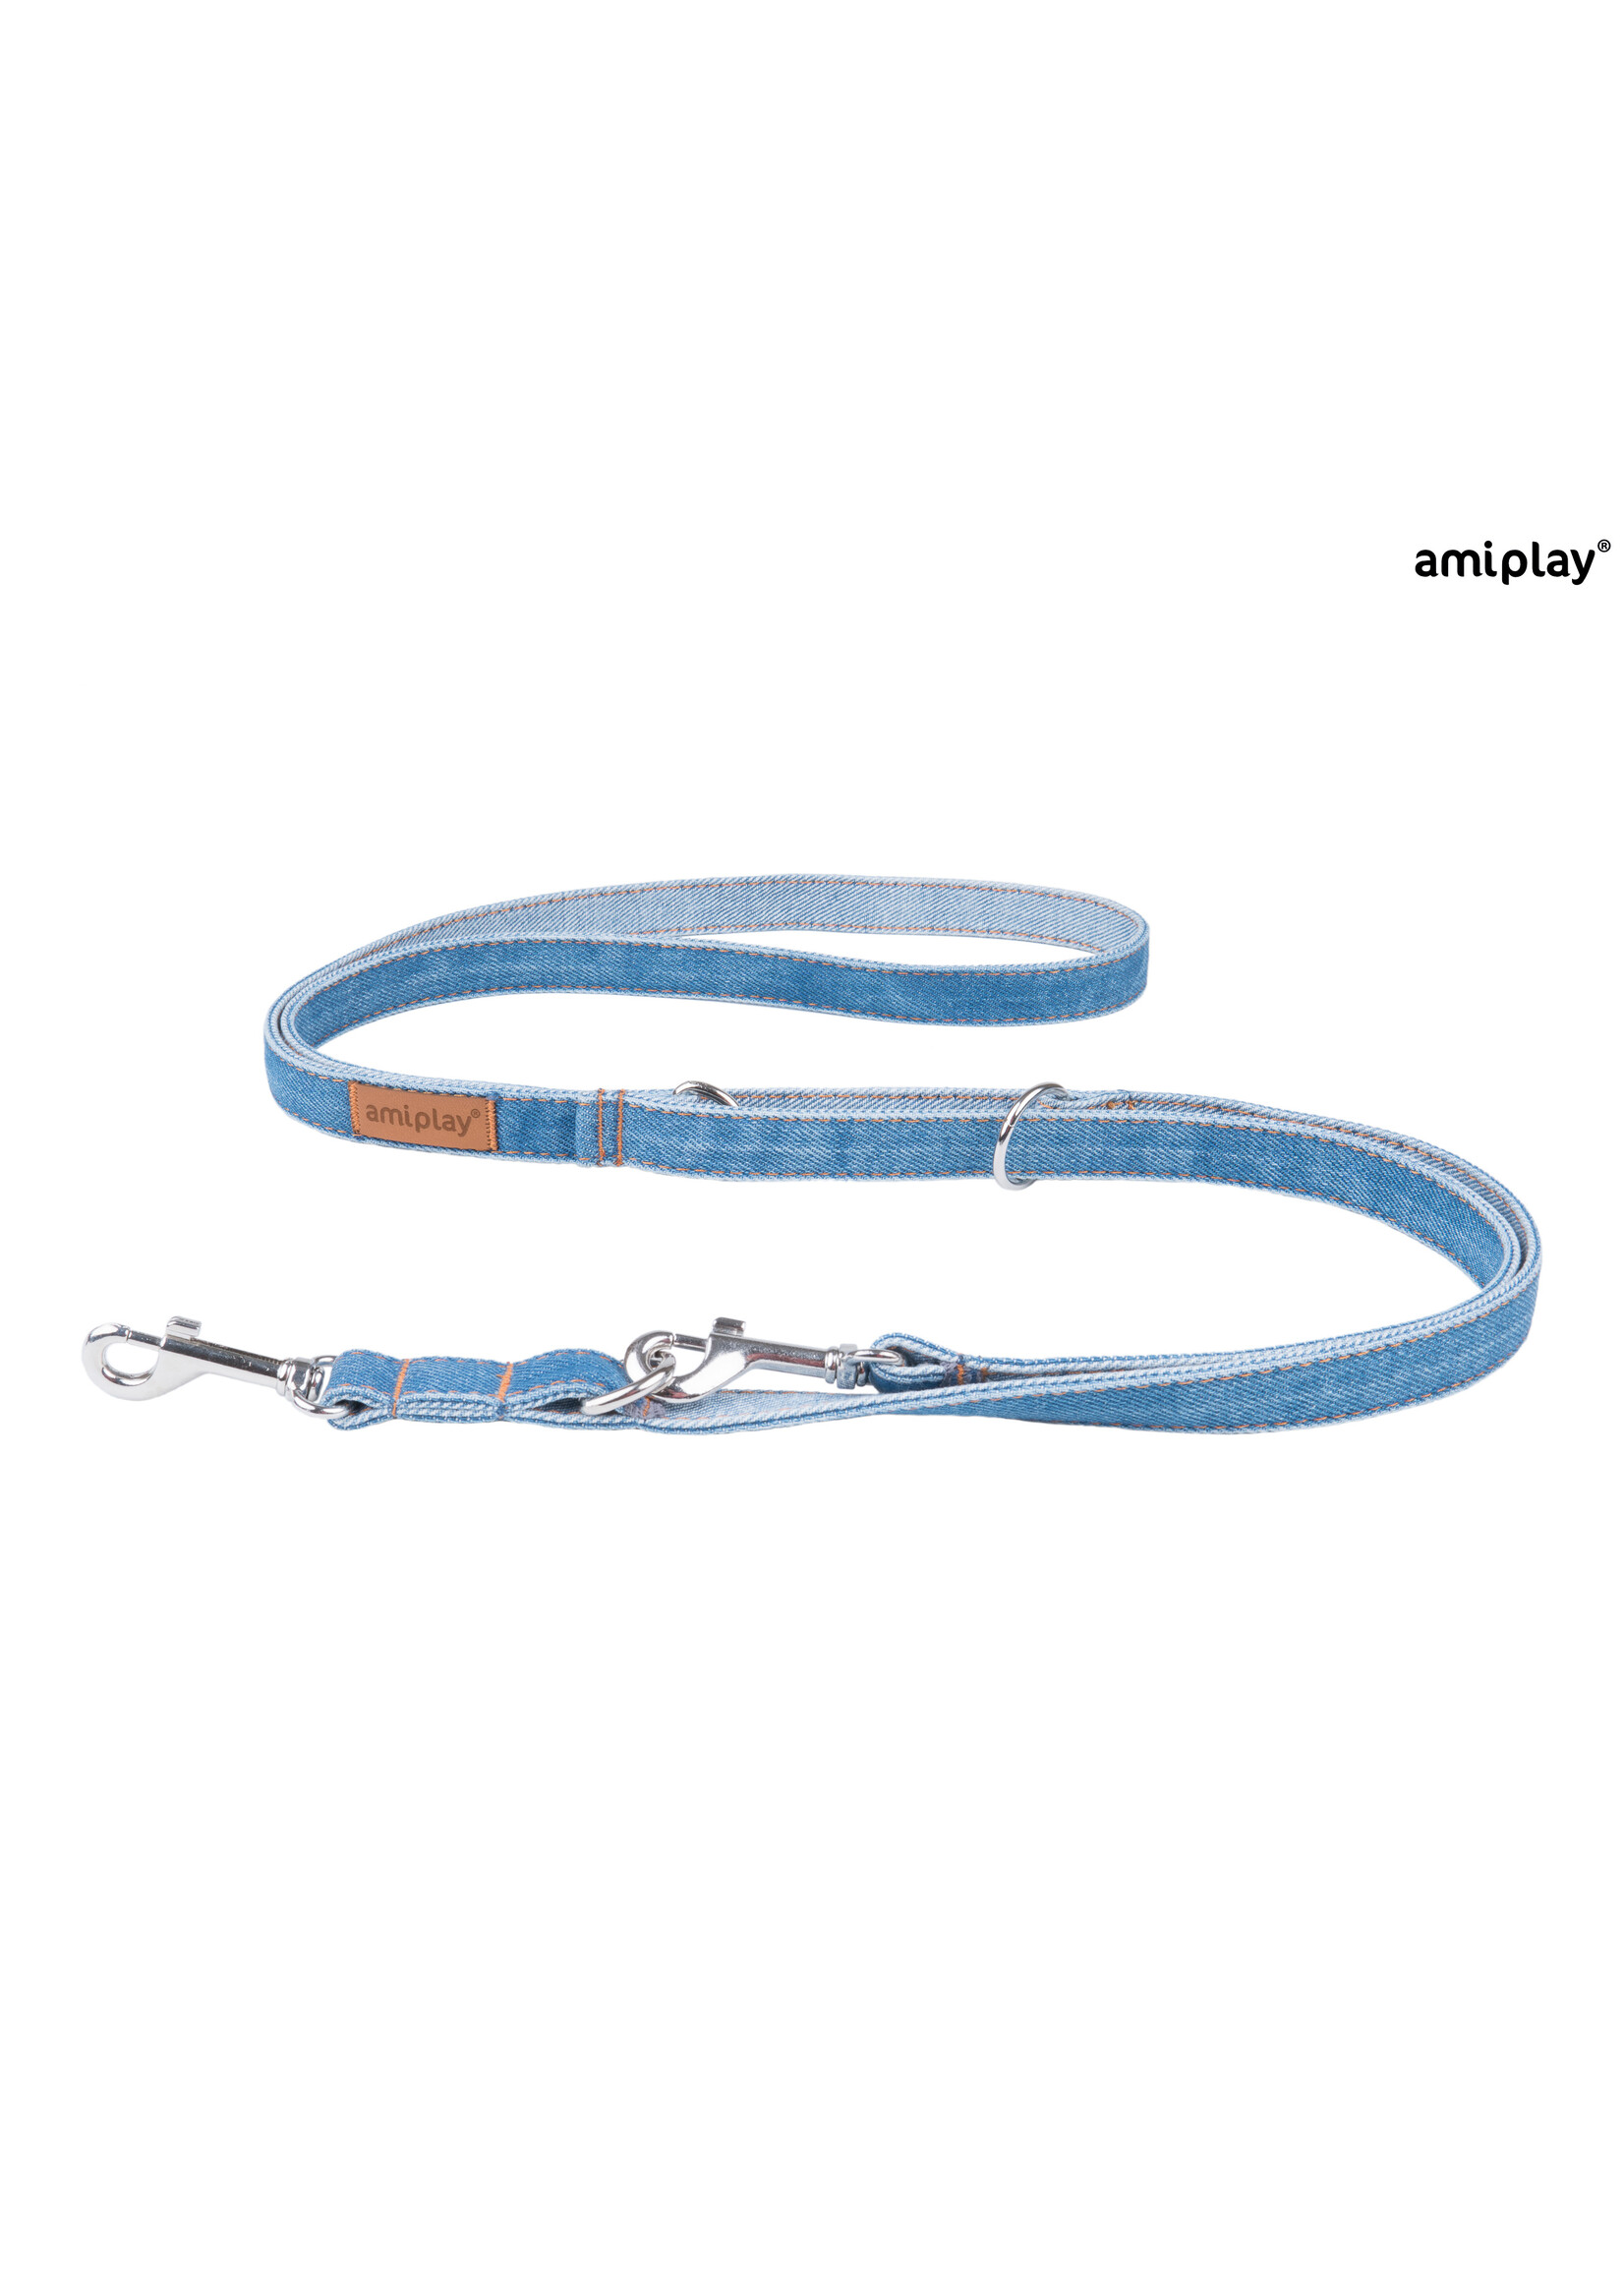 Amiplay Leiband verstelbaar 6in1 Denim blauw  maat-S / 100-200x1cm